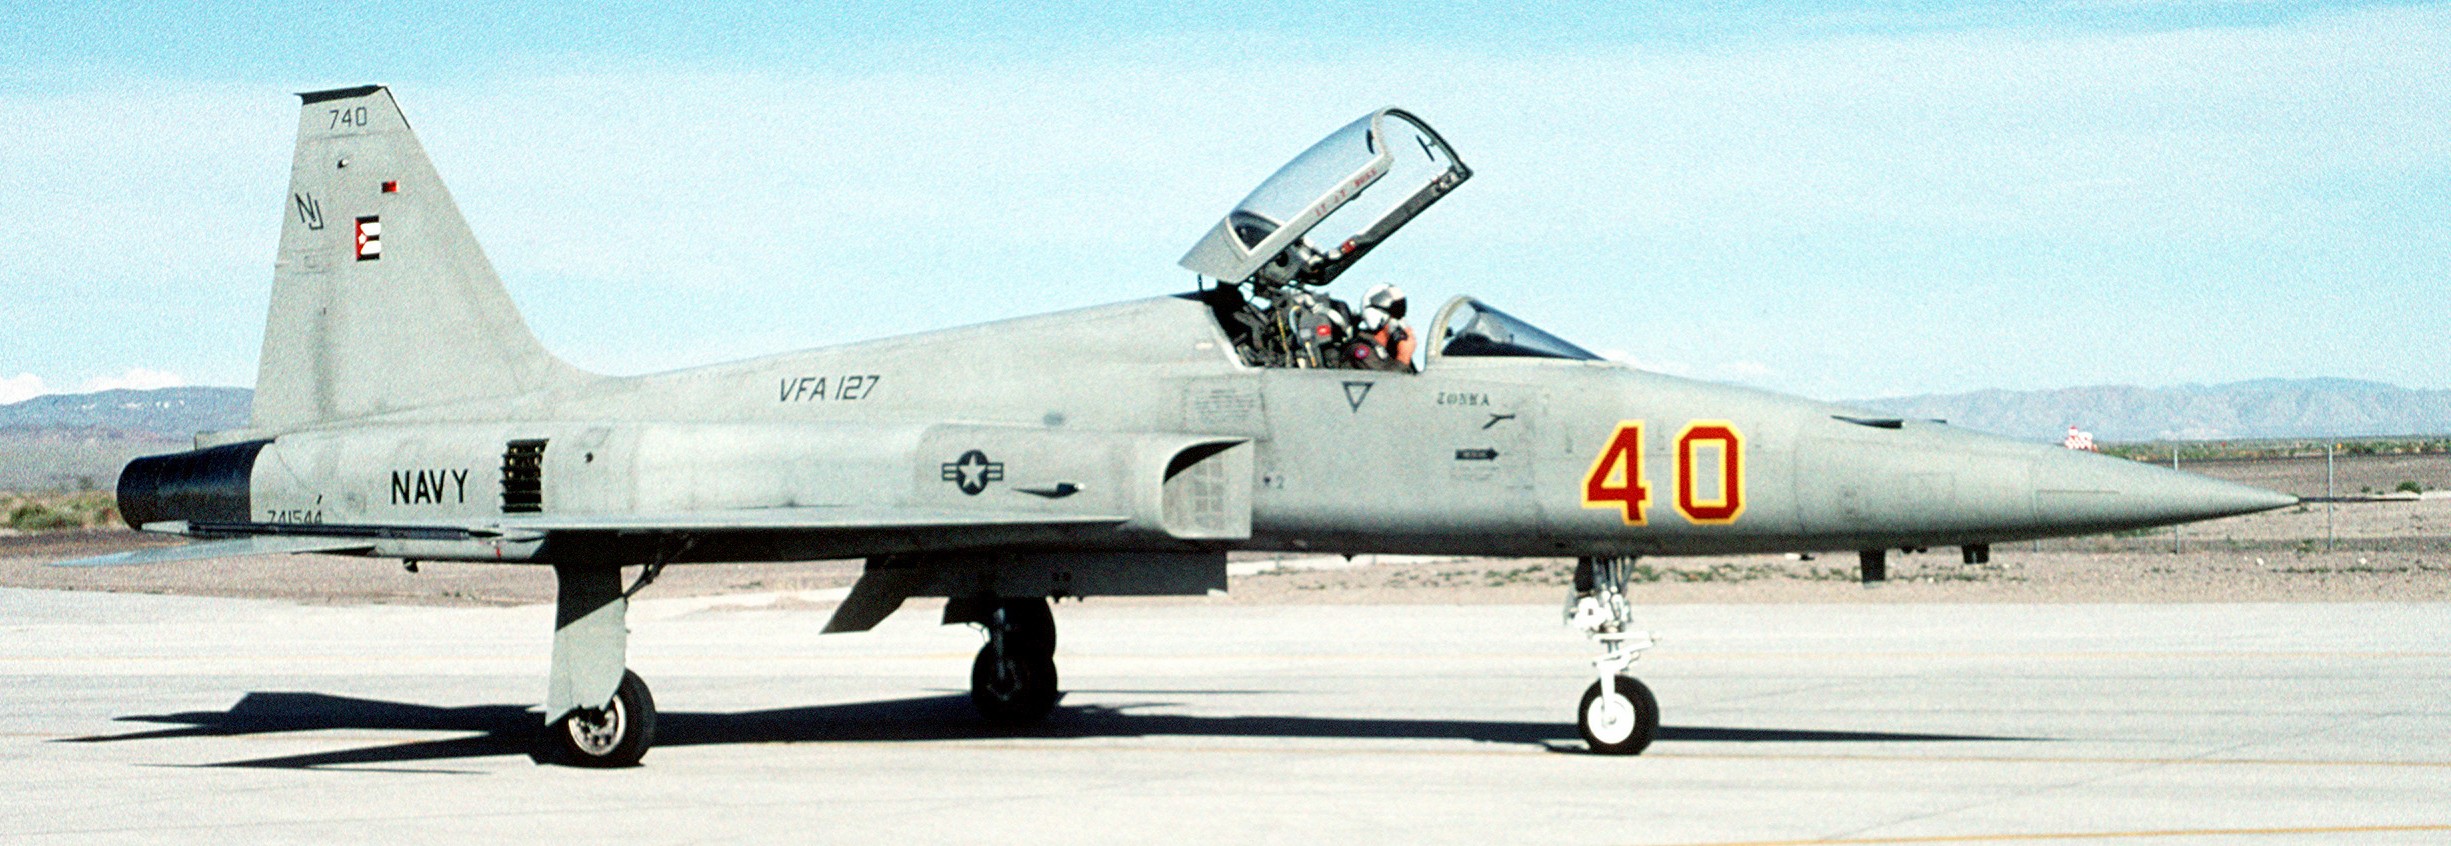 vfa-127 desert bogeys strike fighter squadron f-5e tiger 1993 13